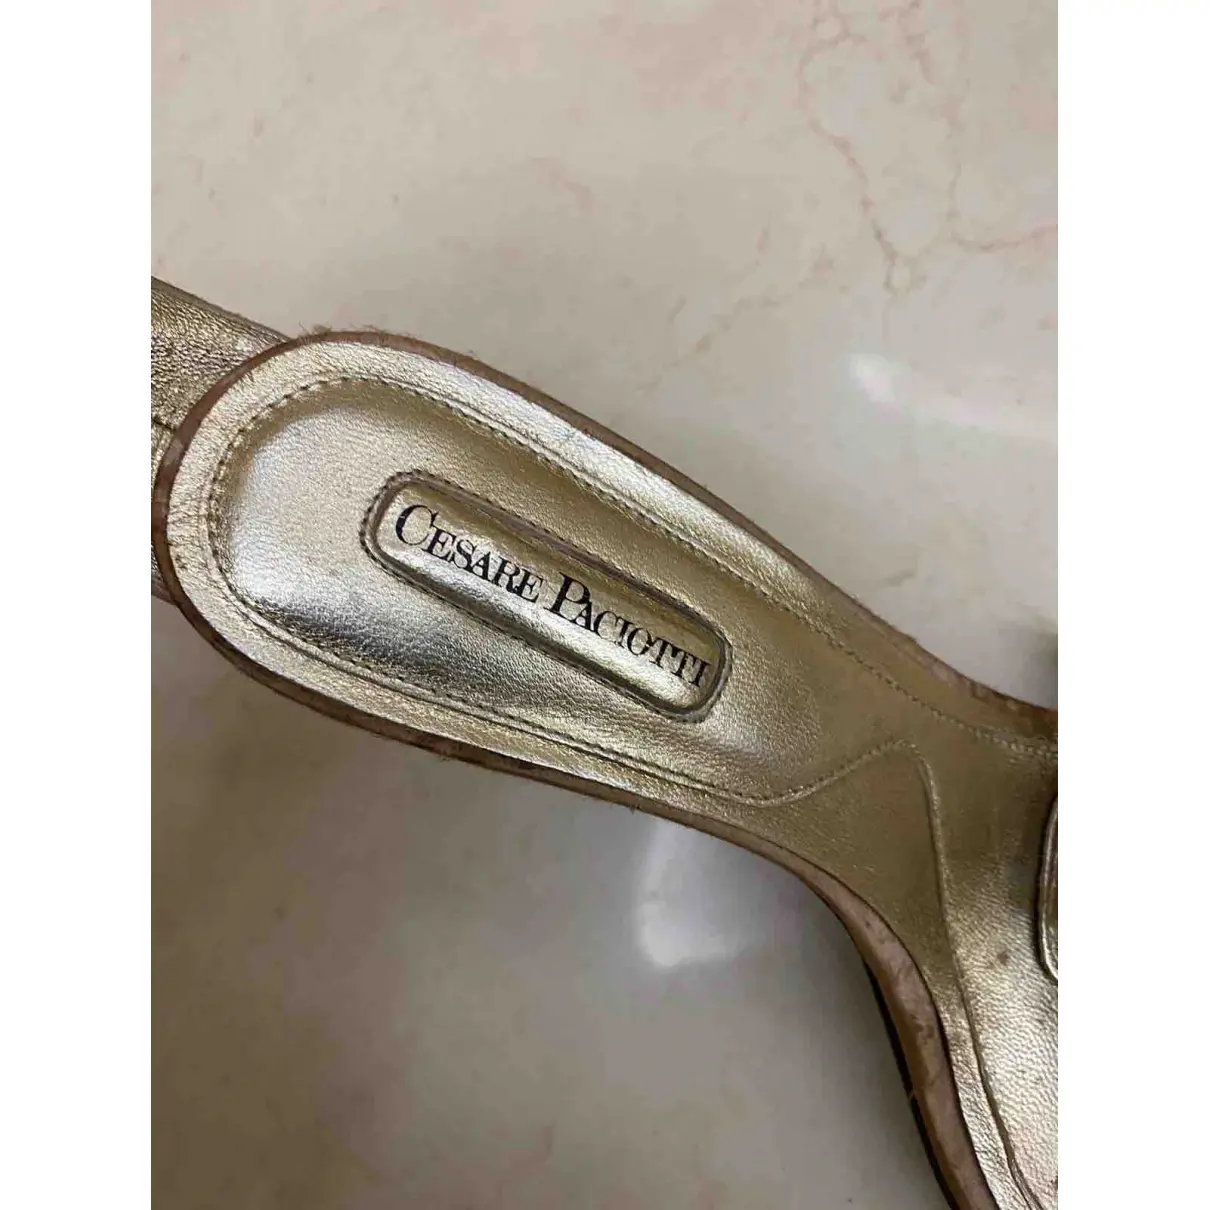 Buy Cesare Paciotti Leather sandals online